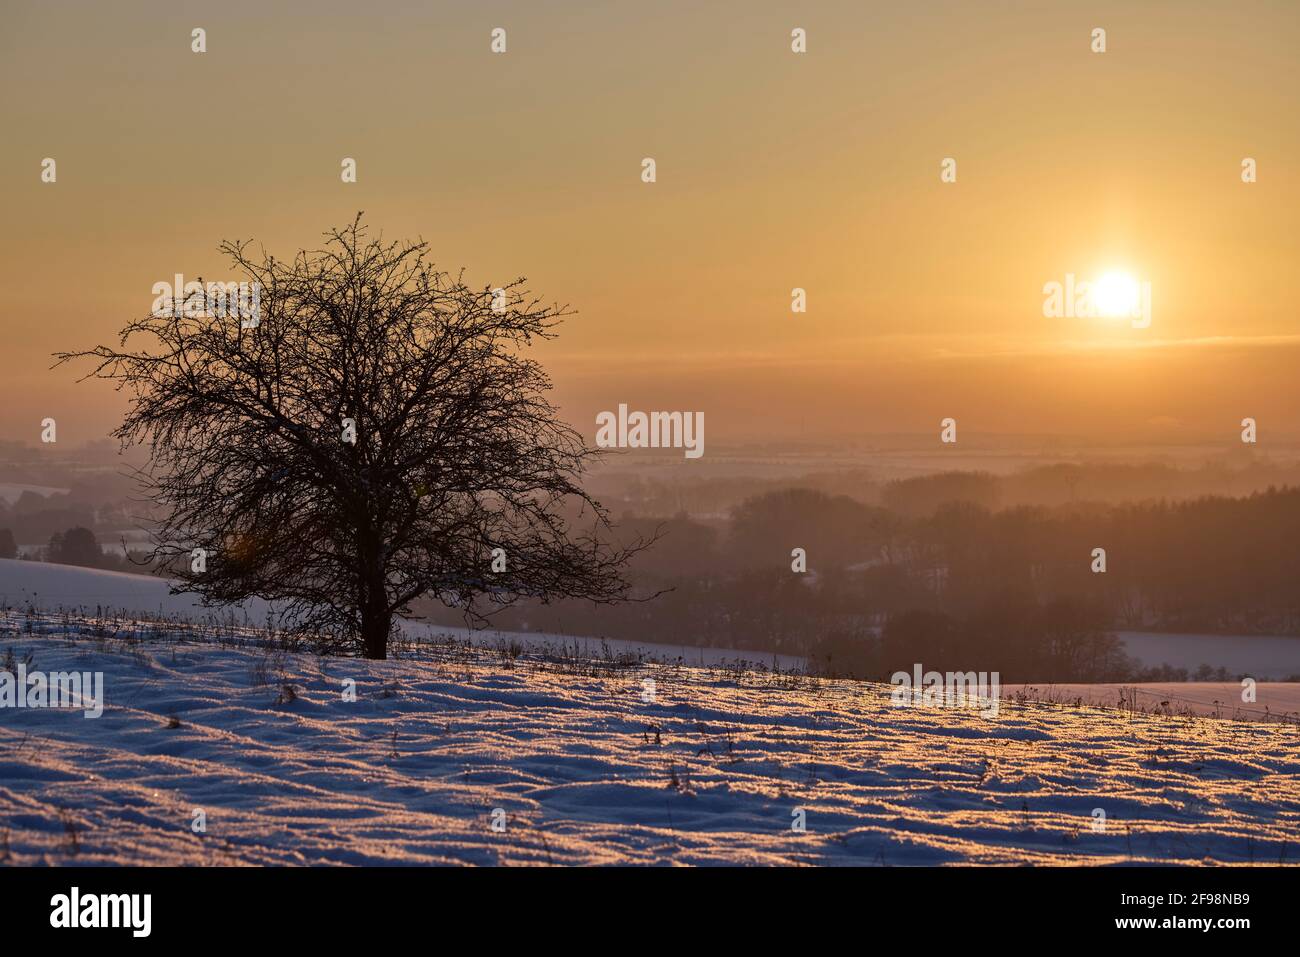 Germany, Mecklenburg-Western Pomerania, Homberg, Cambs, Ludwigslust-Parchim, winter, evening mood Stock Photo